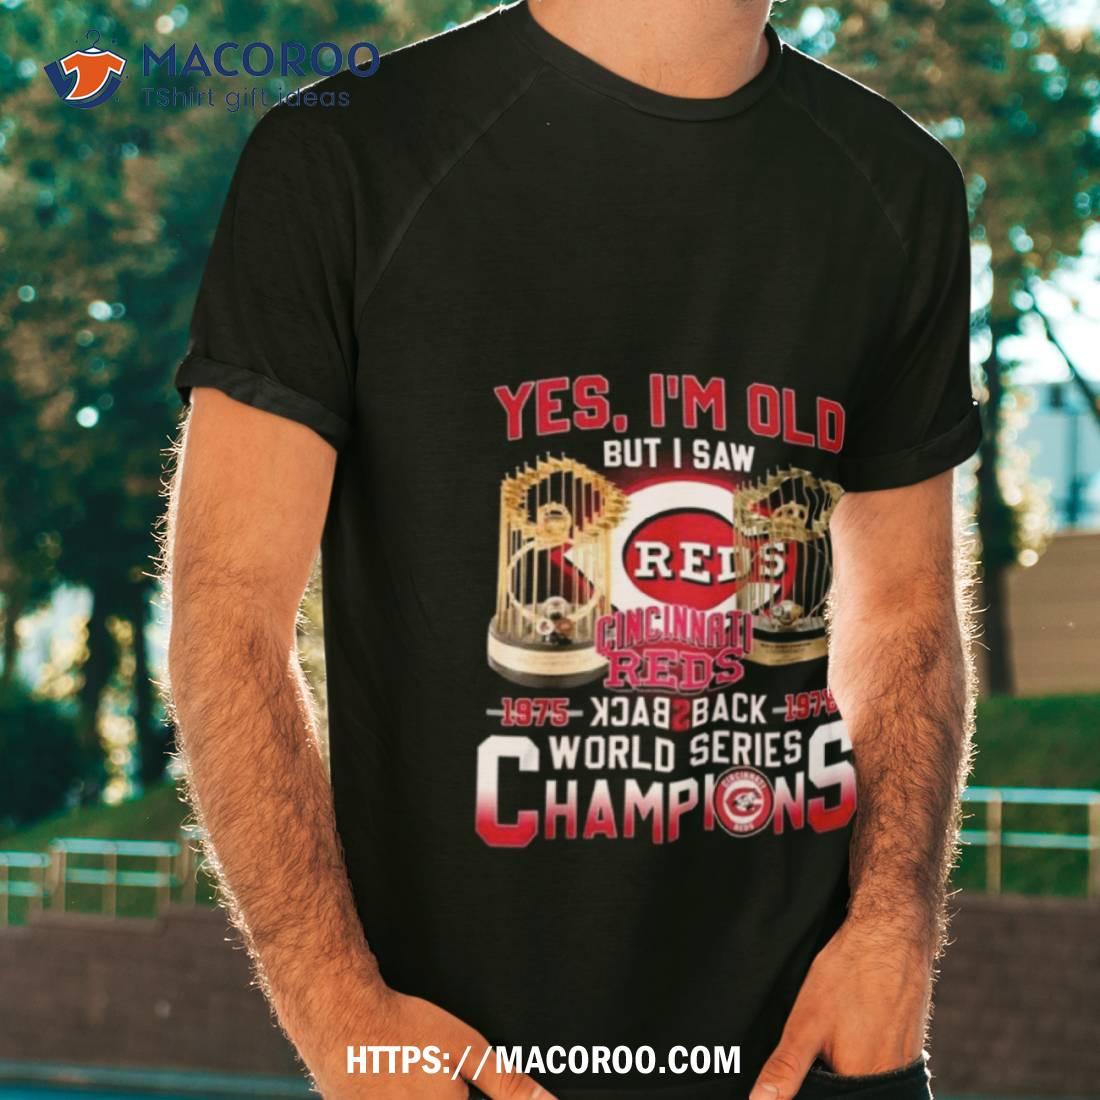 Shirts  Pete Rose Jersey 1976 Cincinnati Reds Pullover Throwback